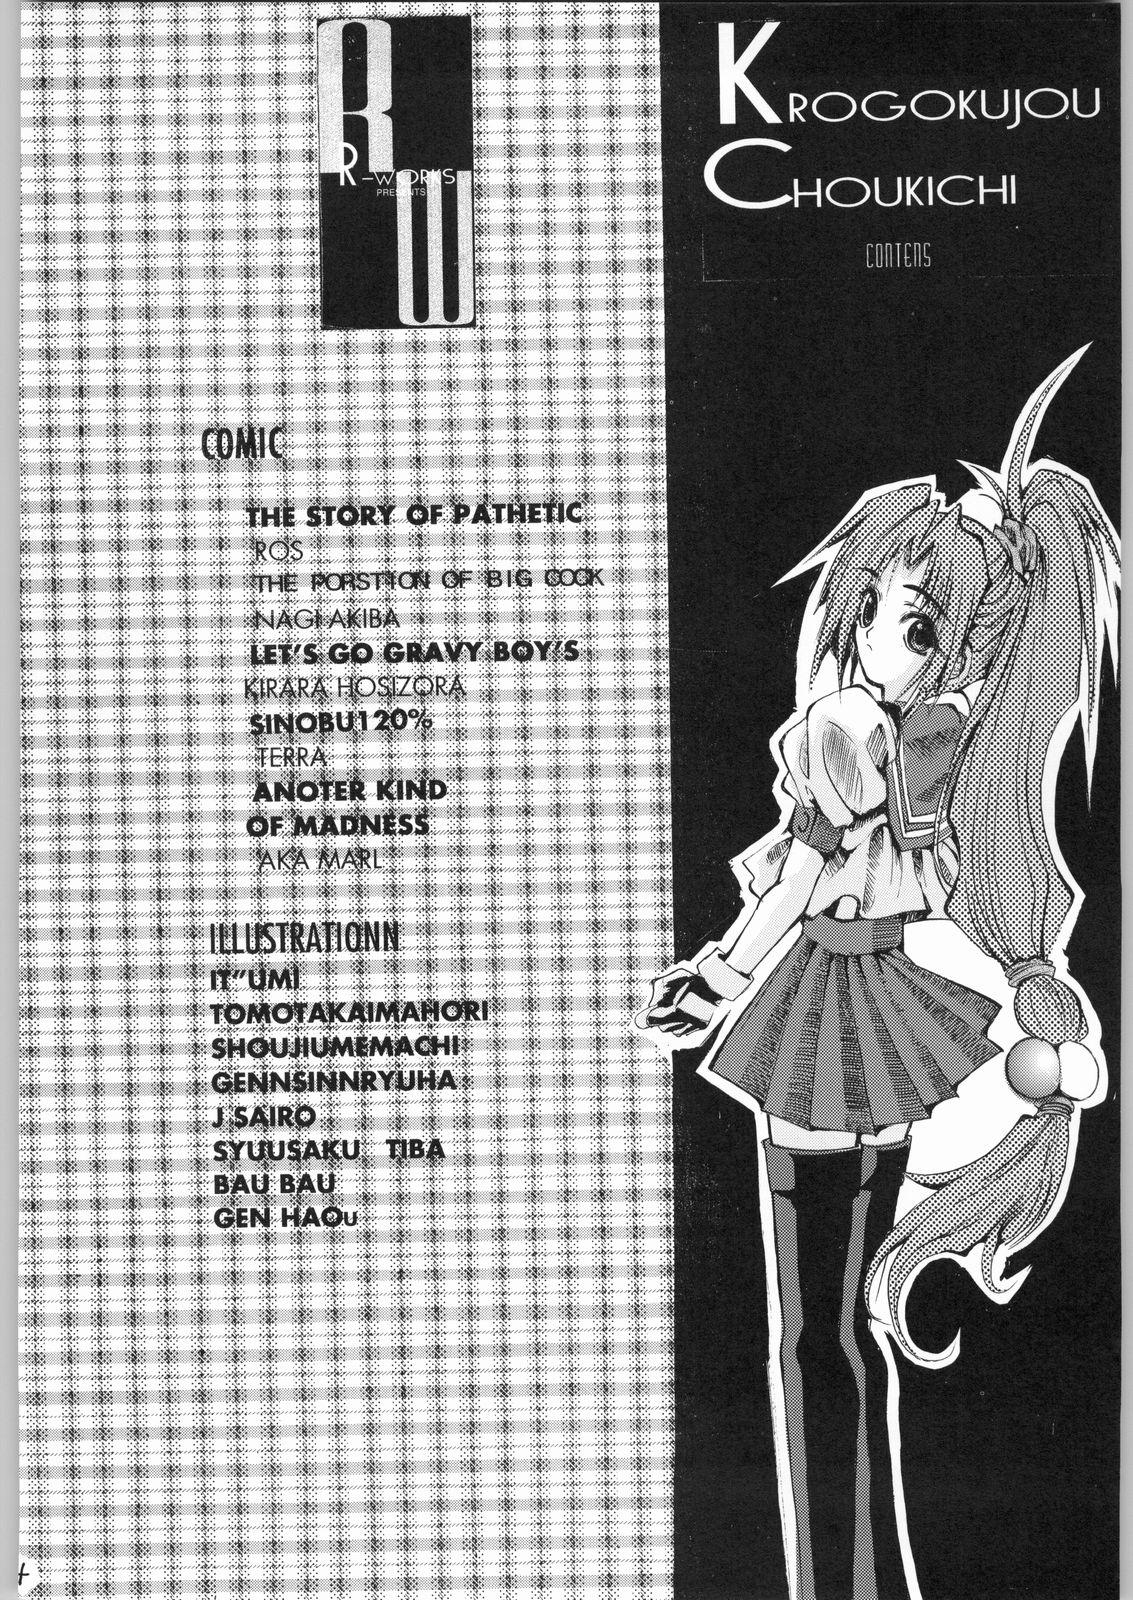 Bunduda Kuro Gokujou Choukichi - Asuka 120 Throat - Page 3